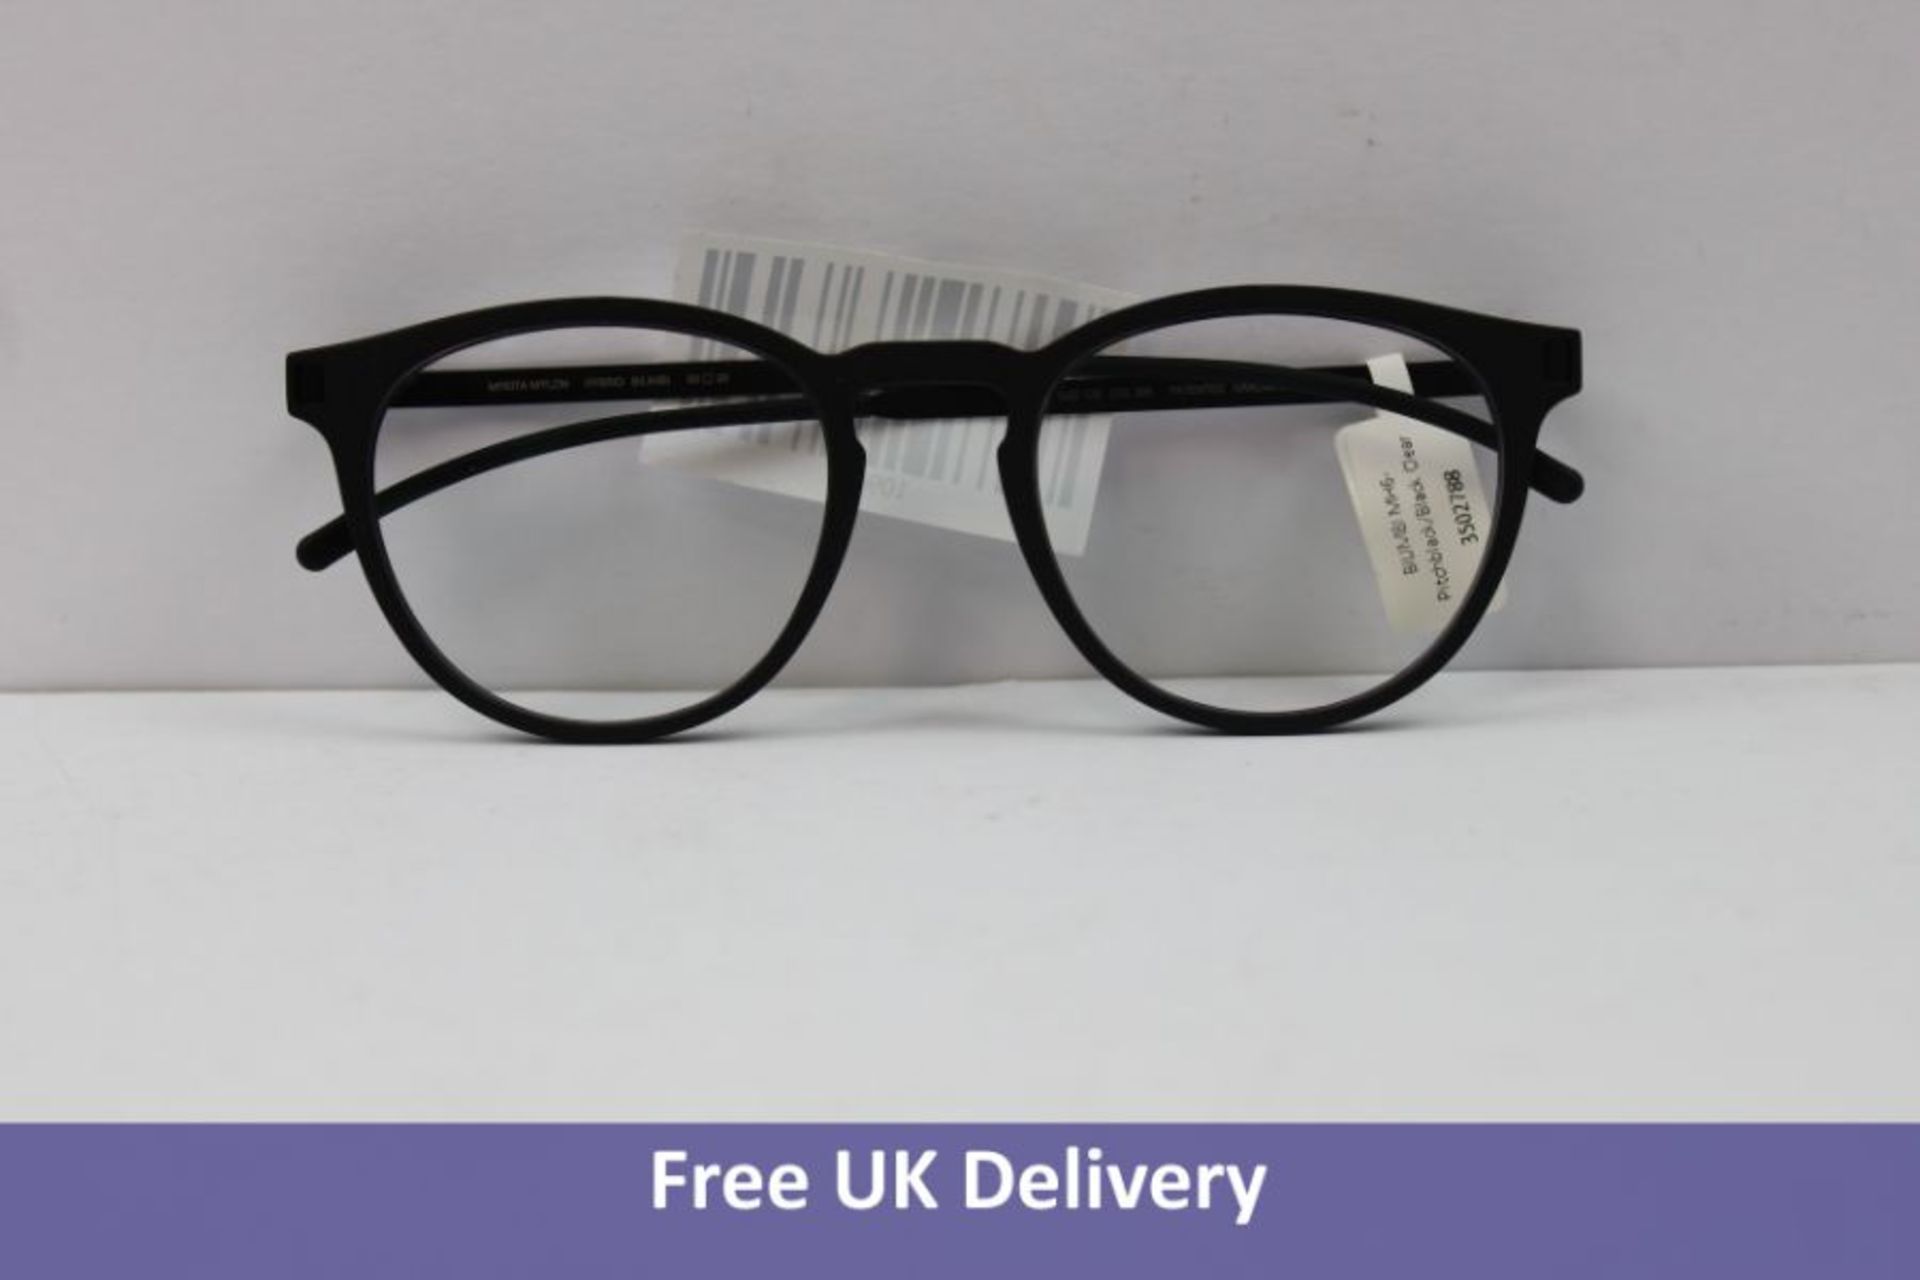 Mykita Bilimbi Unisex Glasses, Pitch Black, Size 135